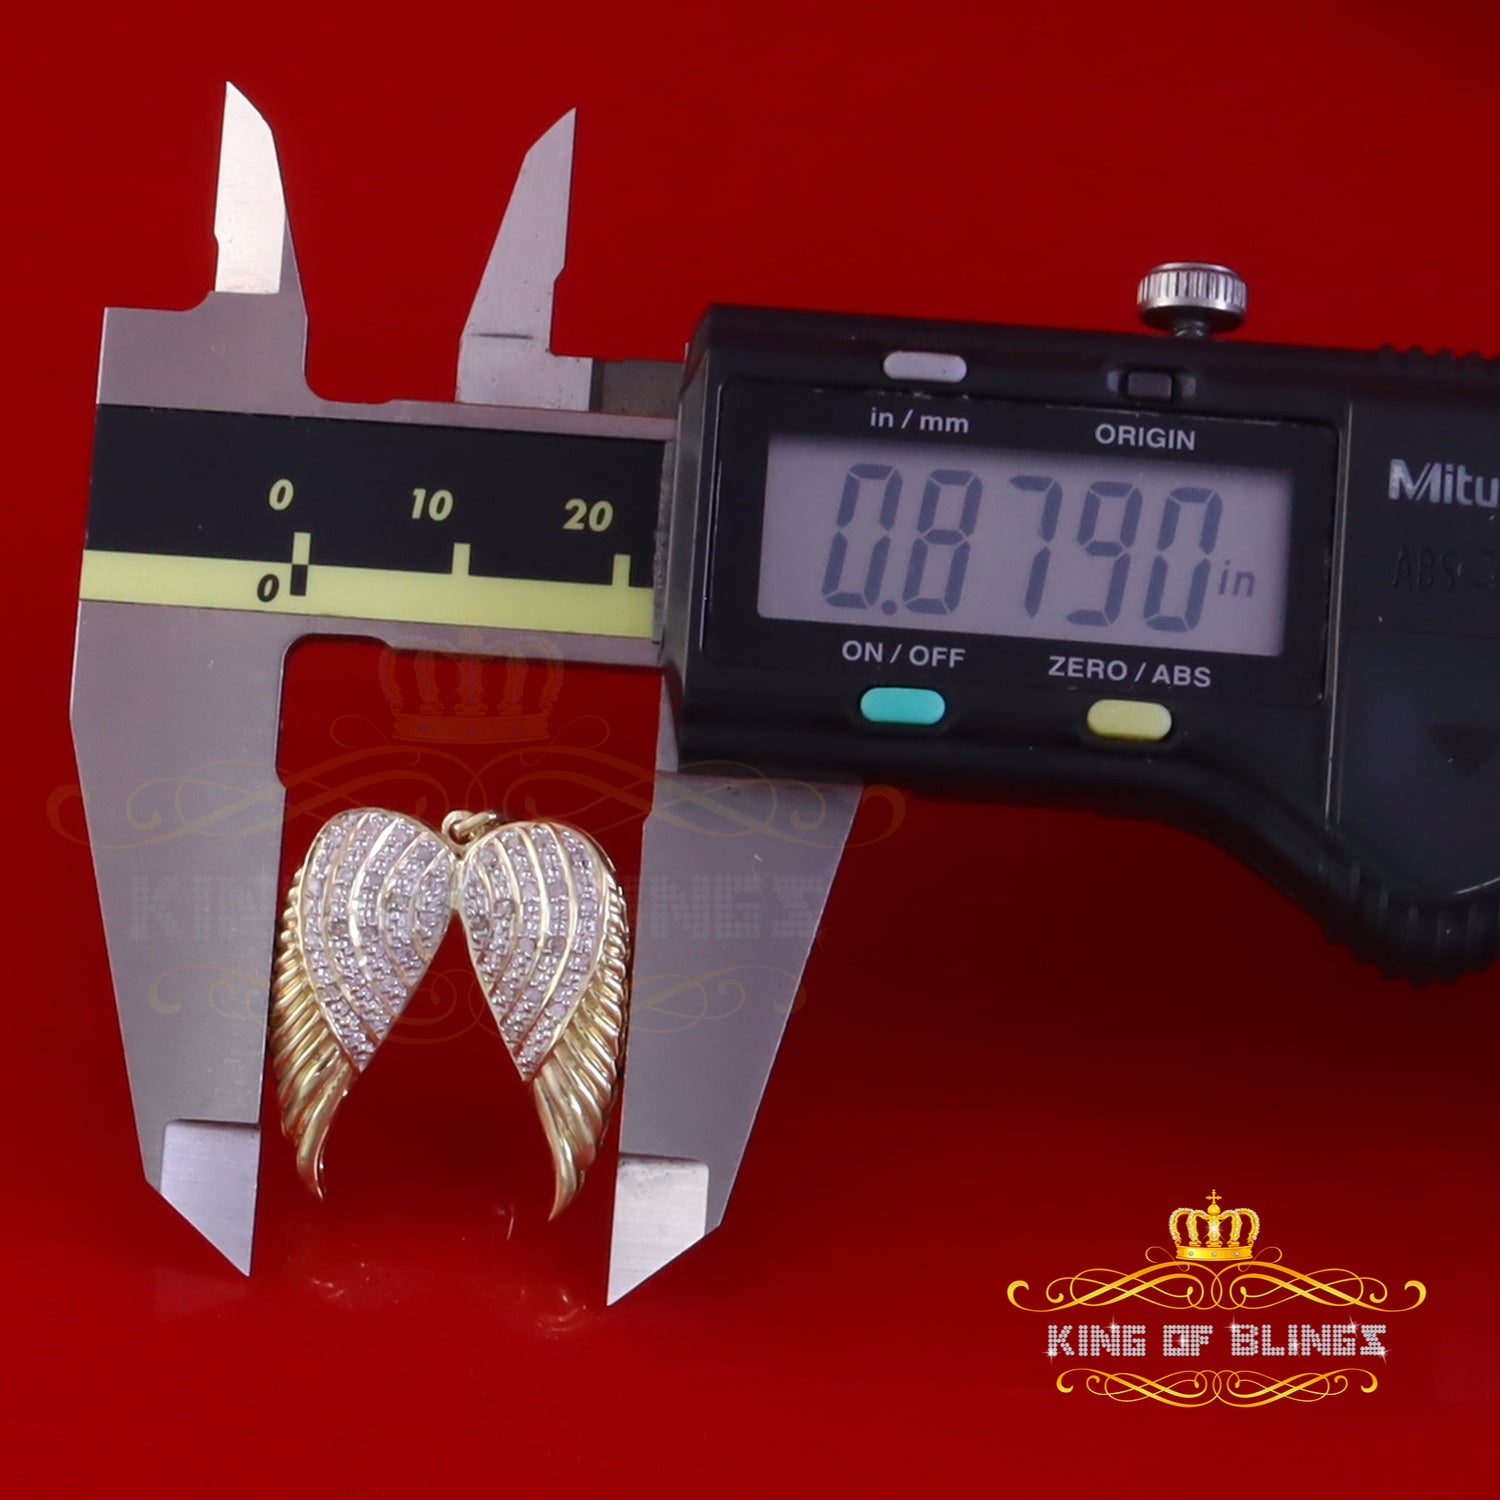 King Of Bling's 0.15ct Genuine Diamond Stones Angel Wings 925 Silver Mens/ Womens Yellow Pendant King Of Blings